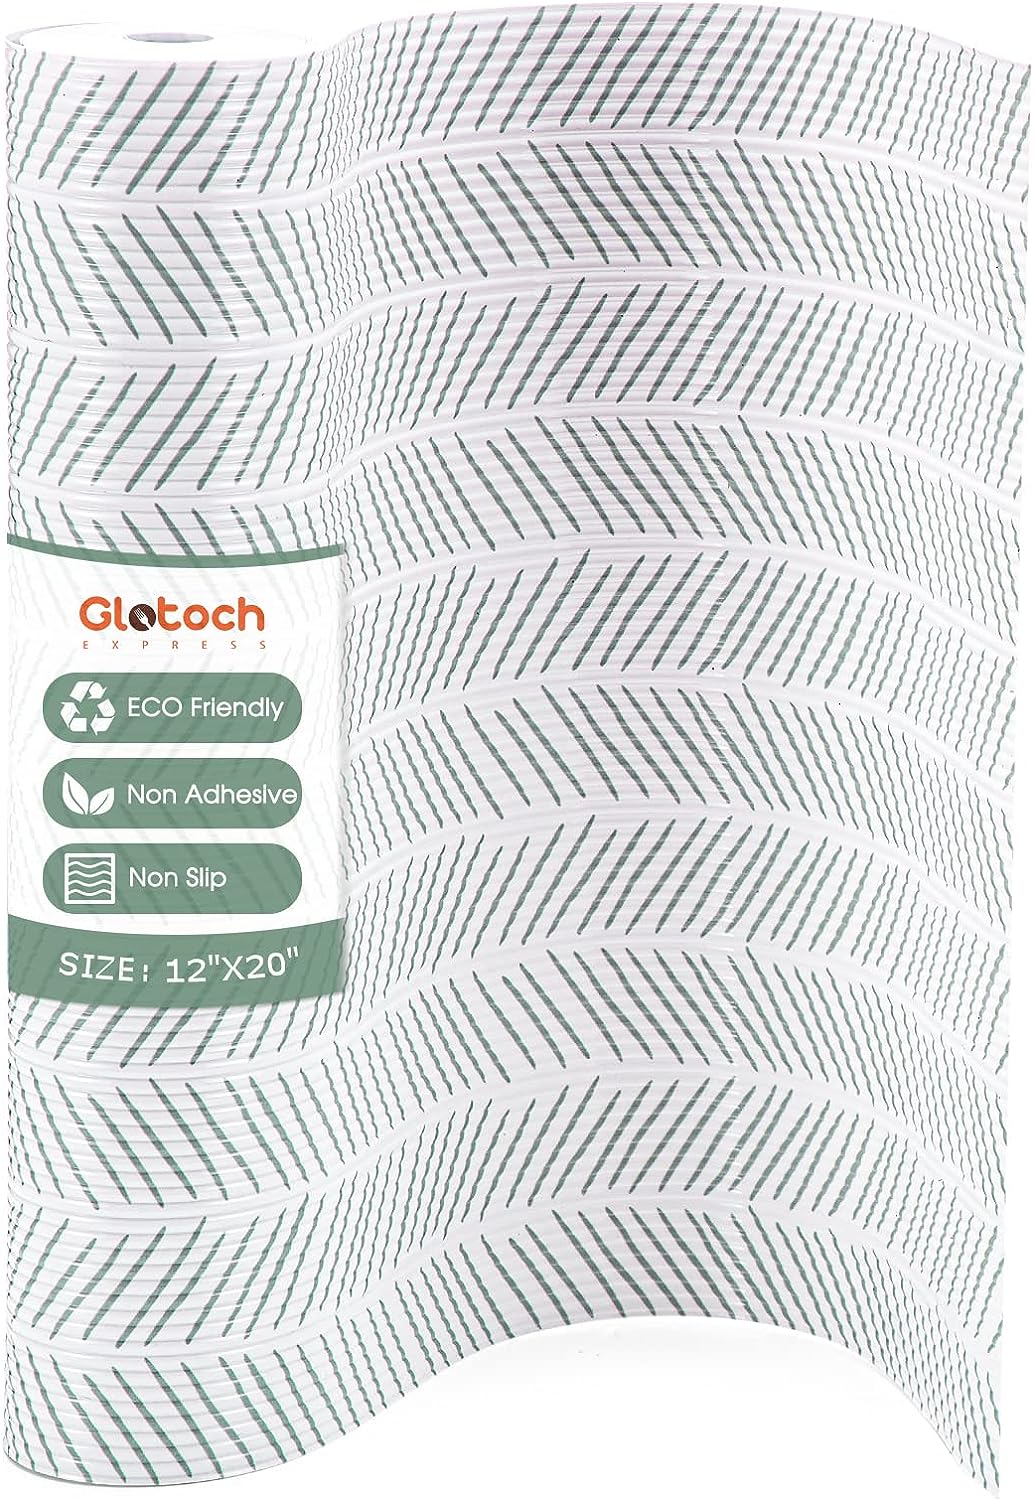 Glotoch Premium Non Slip Shelf Liner, Non Adhesive [...]